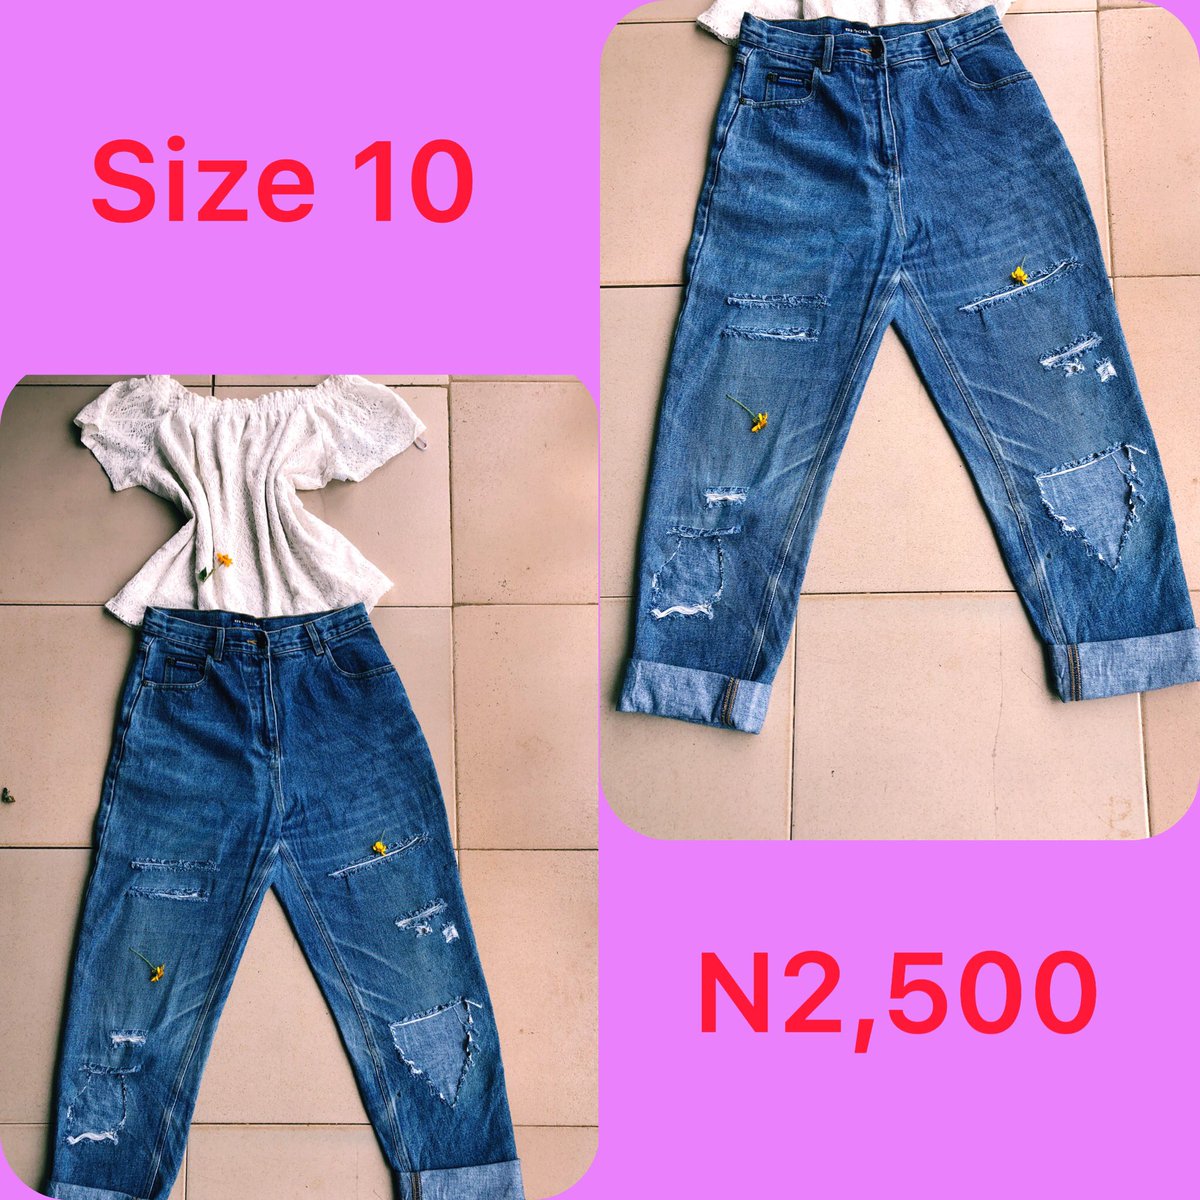 Slide 1: bf jeans       Size 12, N2,000Slide 2: bf jeans       Size 18/20, Price: N3,000Slide 3: bf jeans       Size 10, Price: N2,500Slide 4: bf jeans       Size 10, Price N2,500